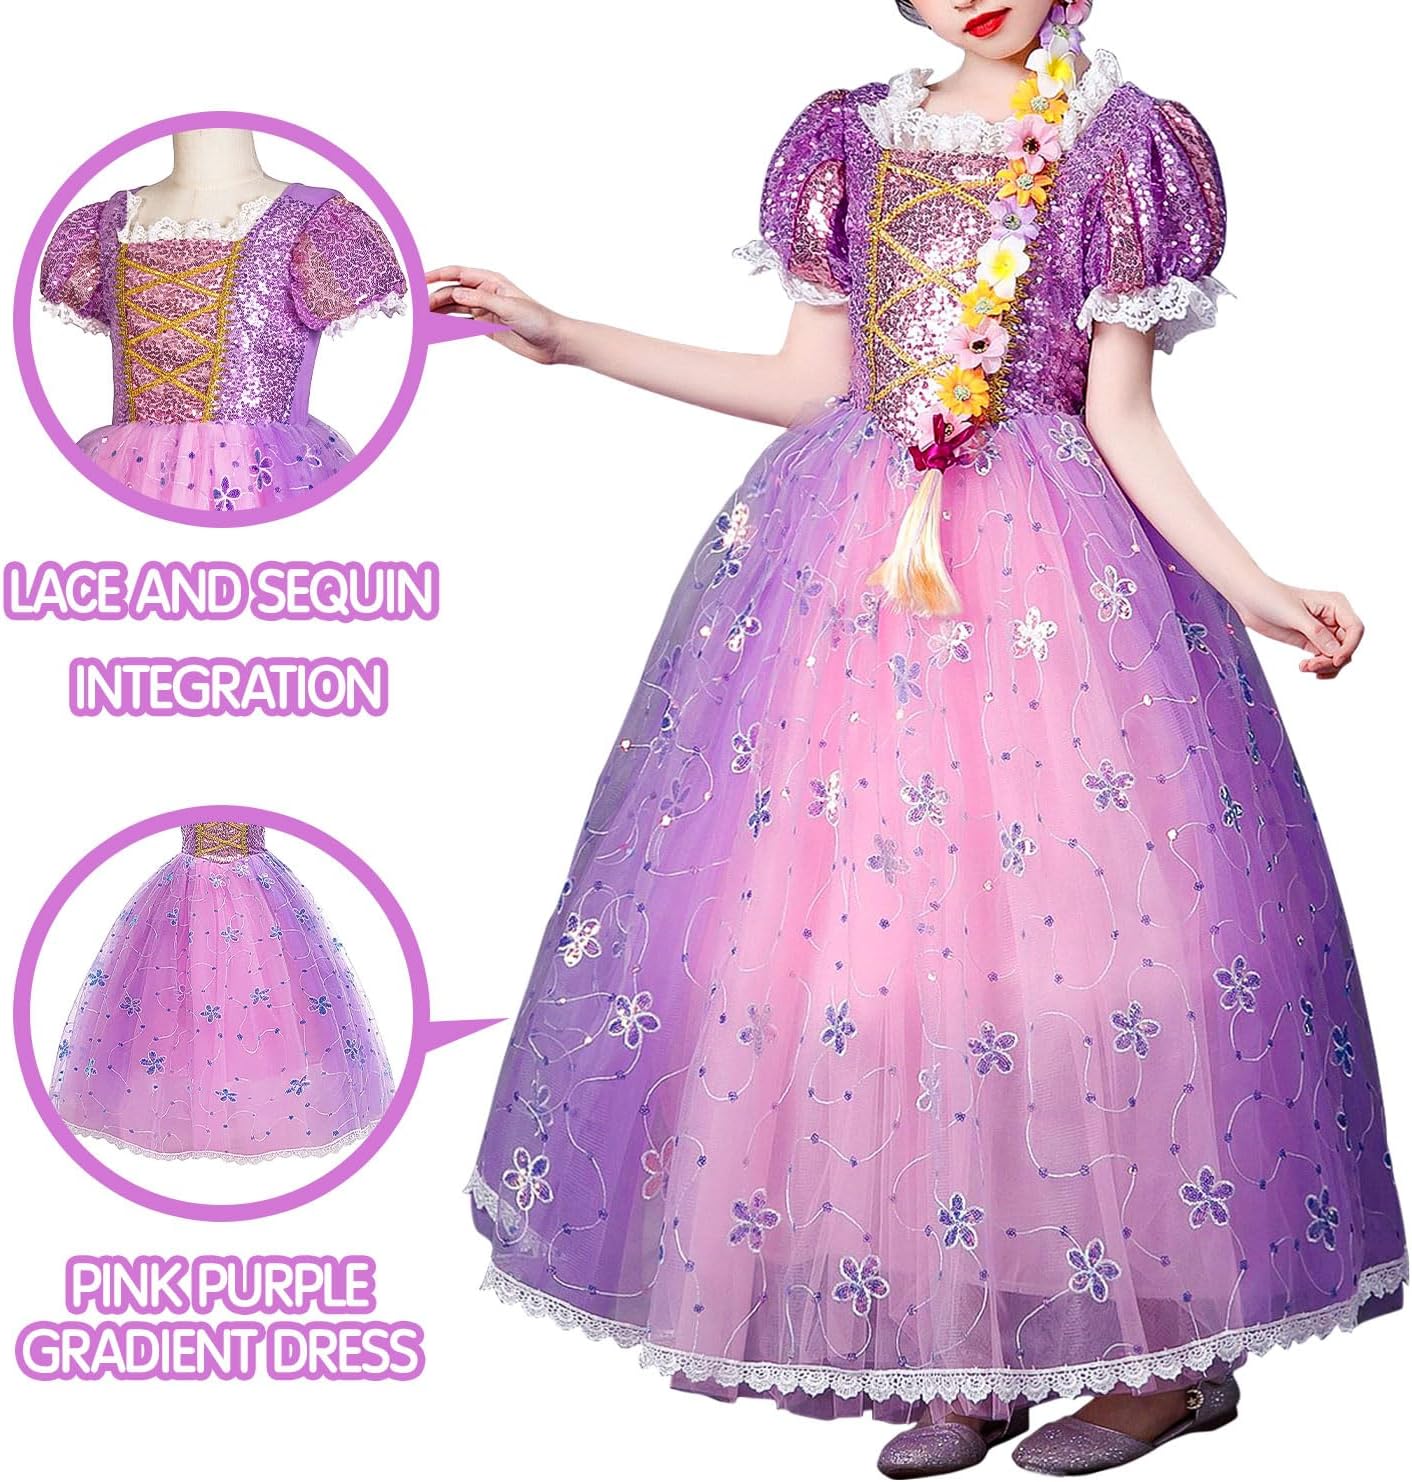 UPORPOR Light Up Princess Dress Up Clothes LED Halloween Girls